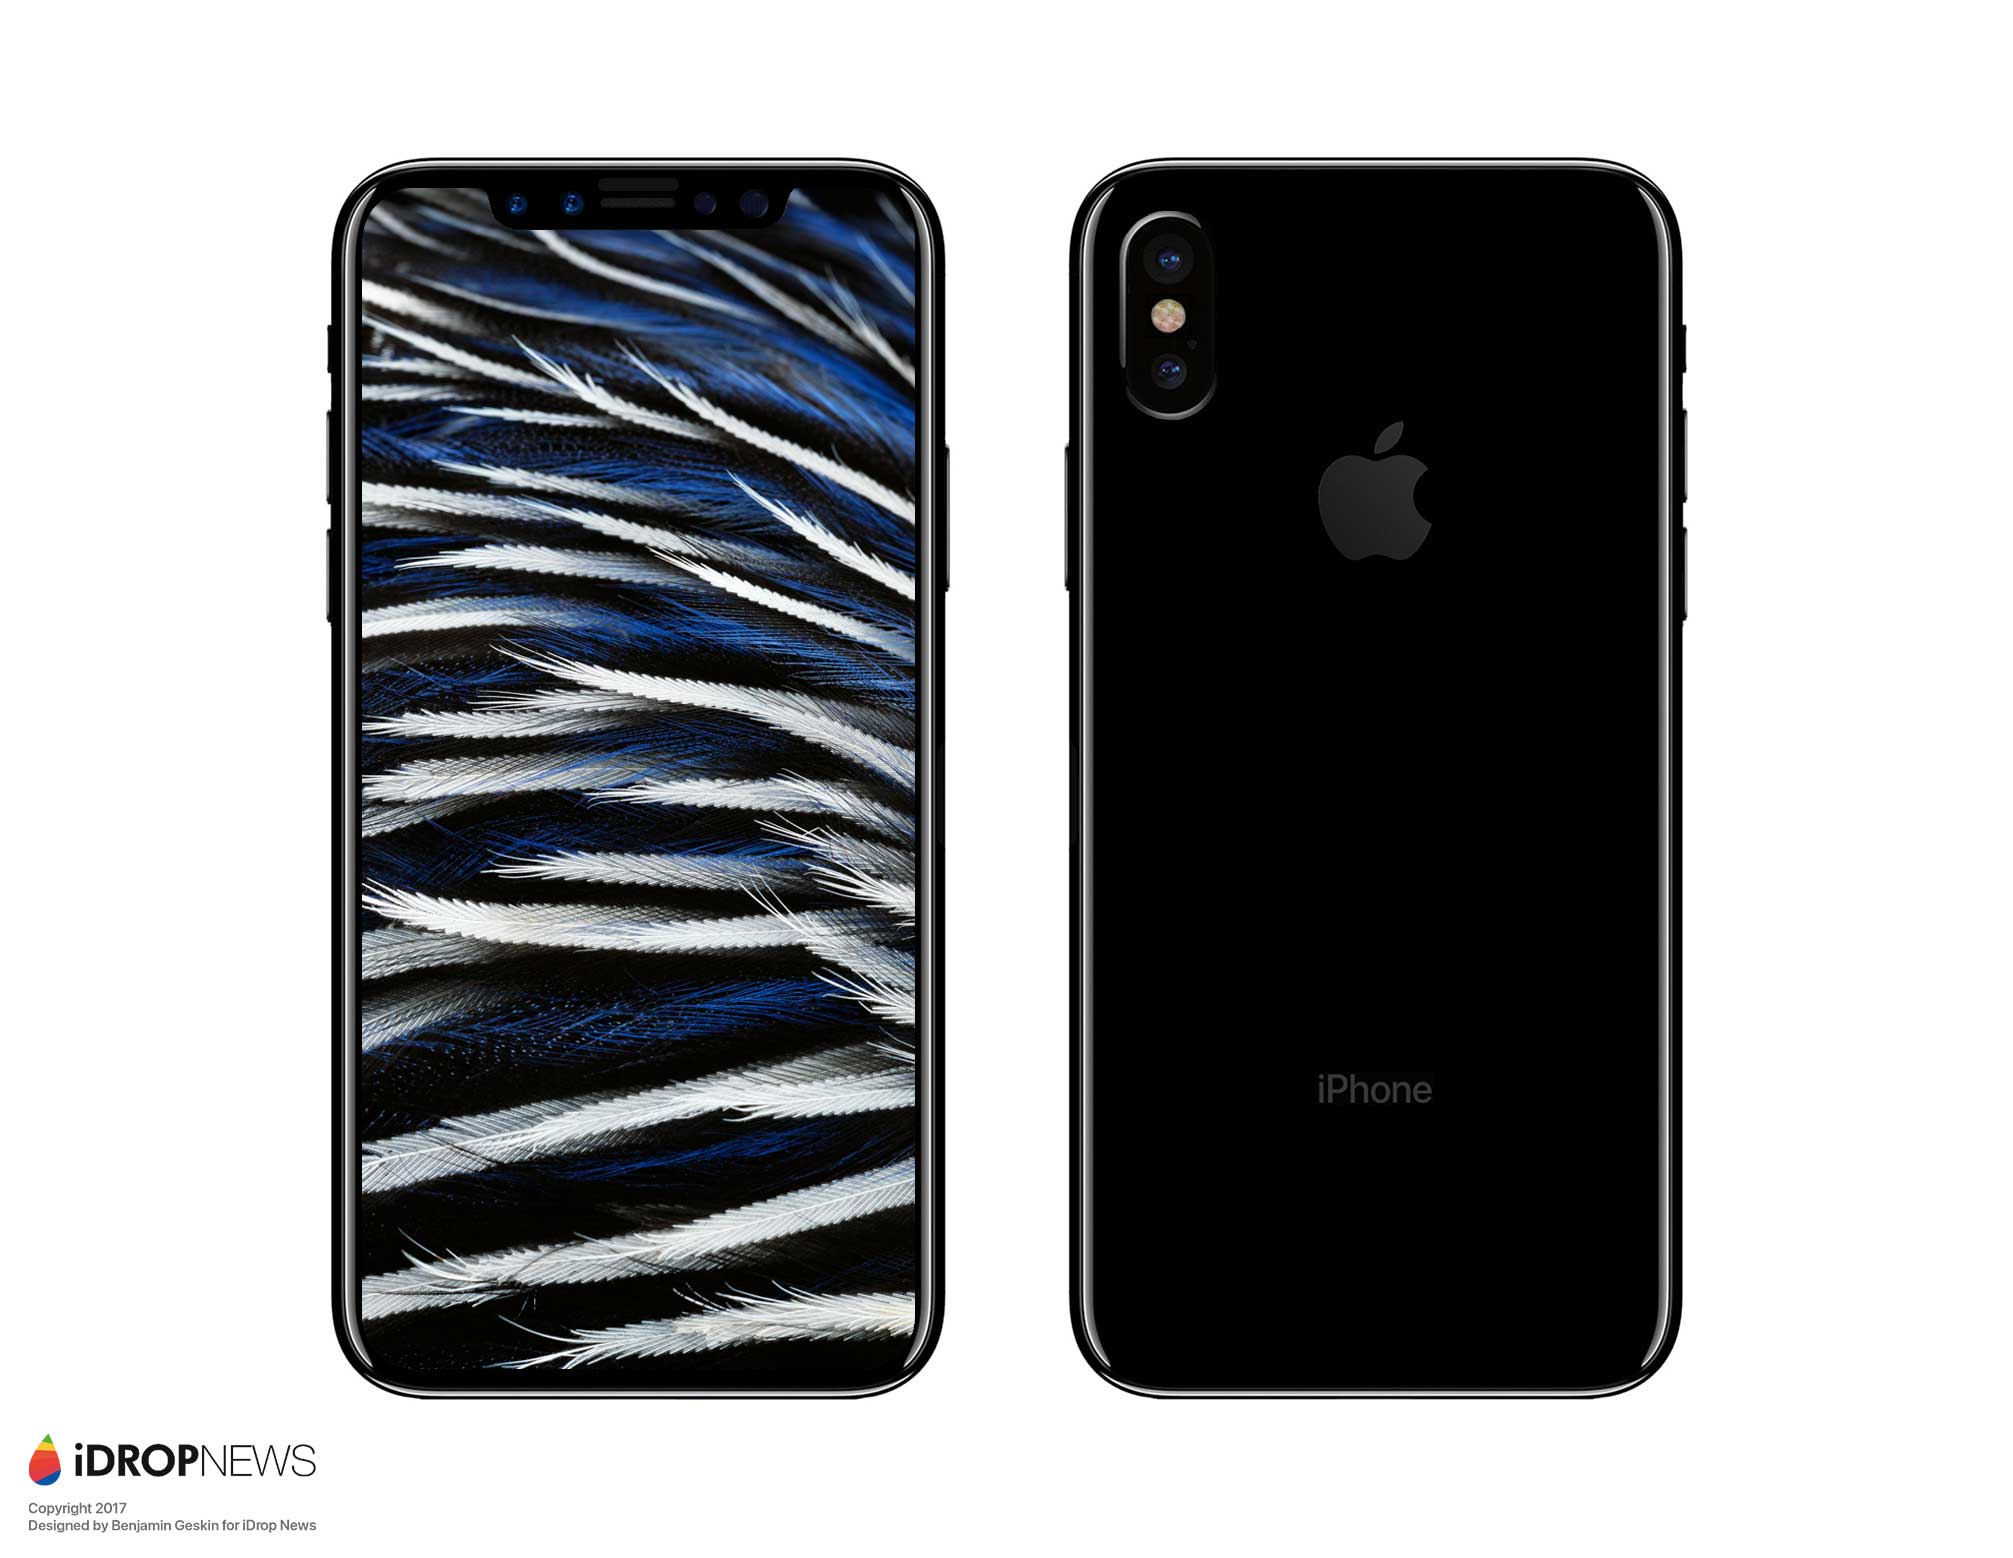 iPhone-8-Size-Comparison-iDrop-News-5.jpg